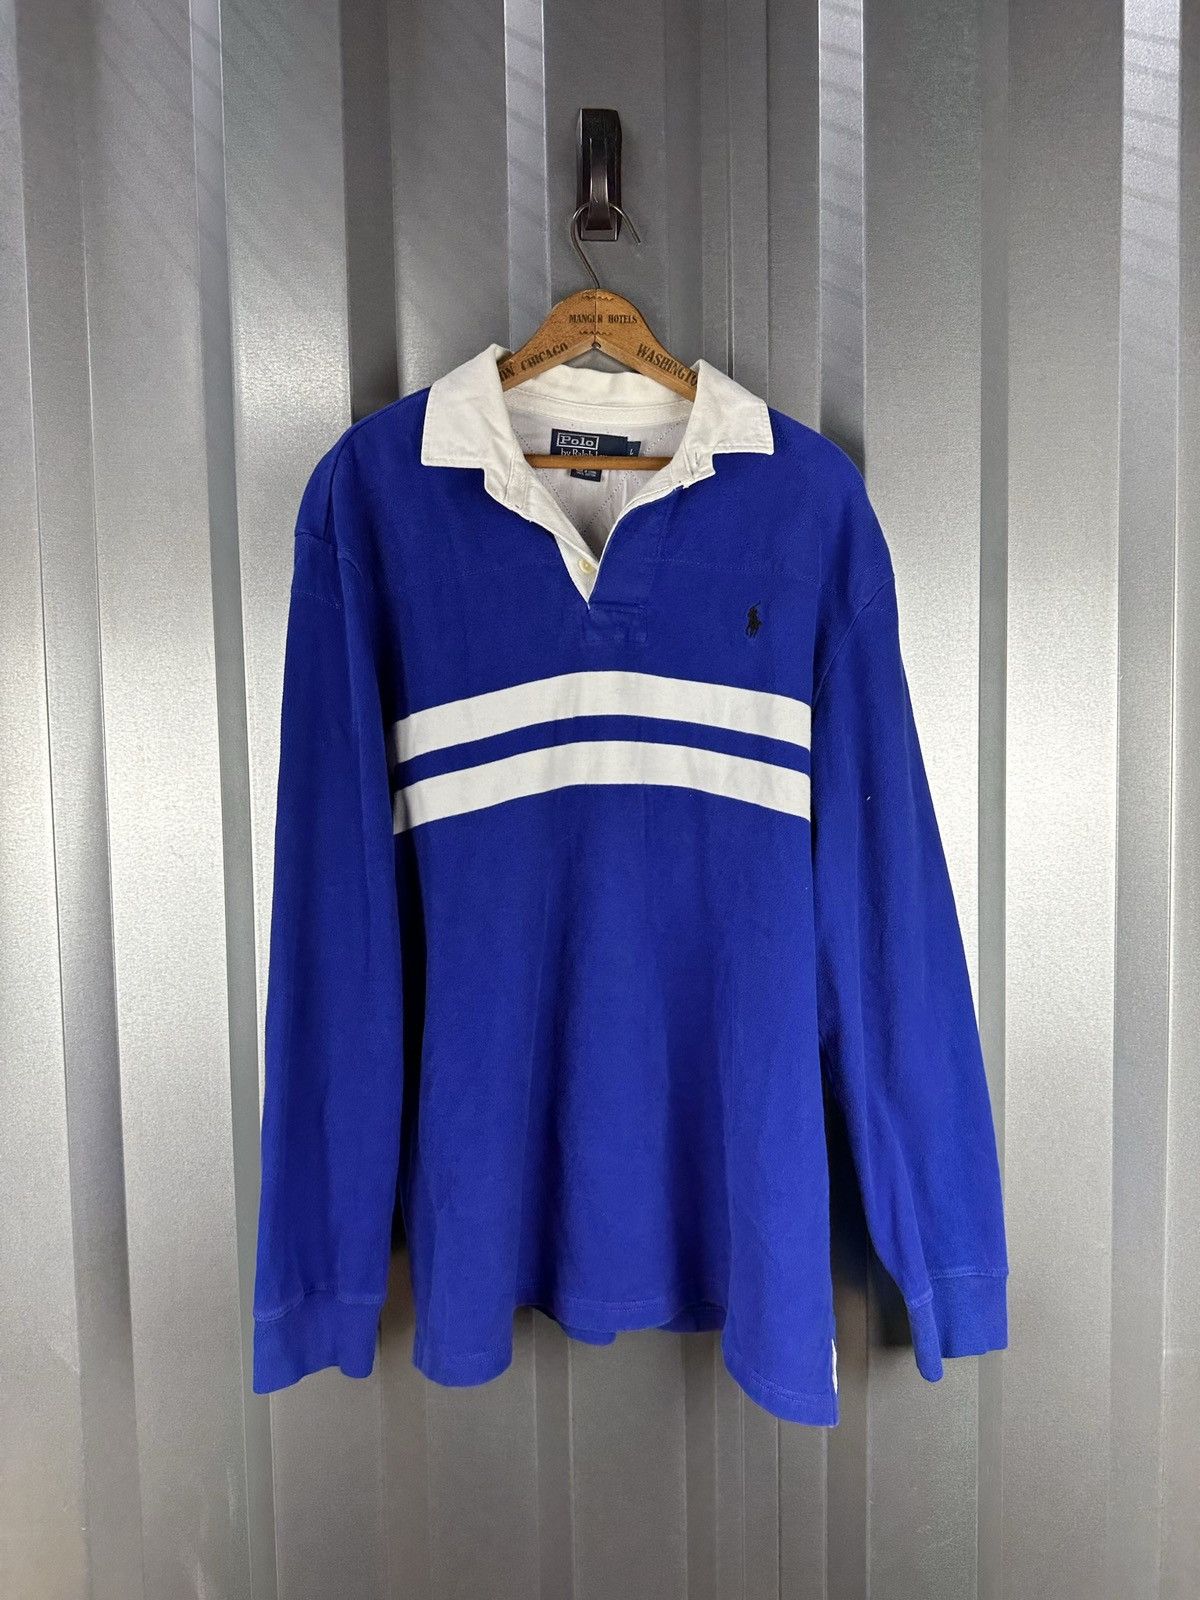 Polo Ralph Lauren Vintage Polo Ralph Lauren Blue Striped Rugby Polo Shirt Size US L / EU 52-54 / 3 - 1 Preview